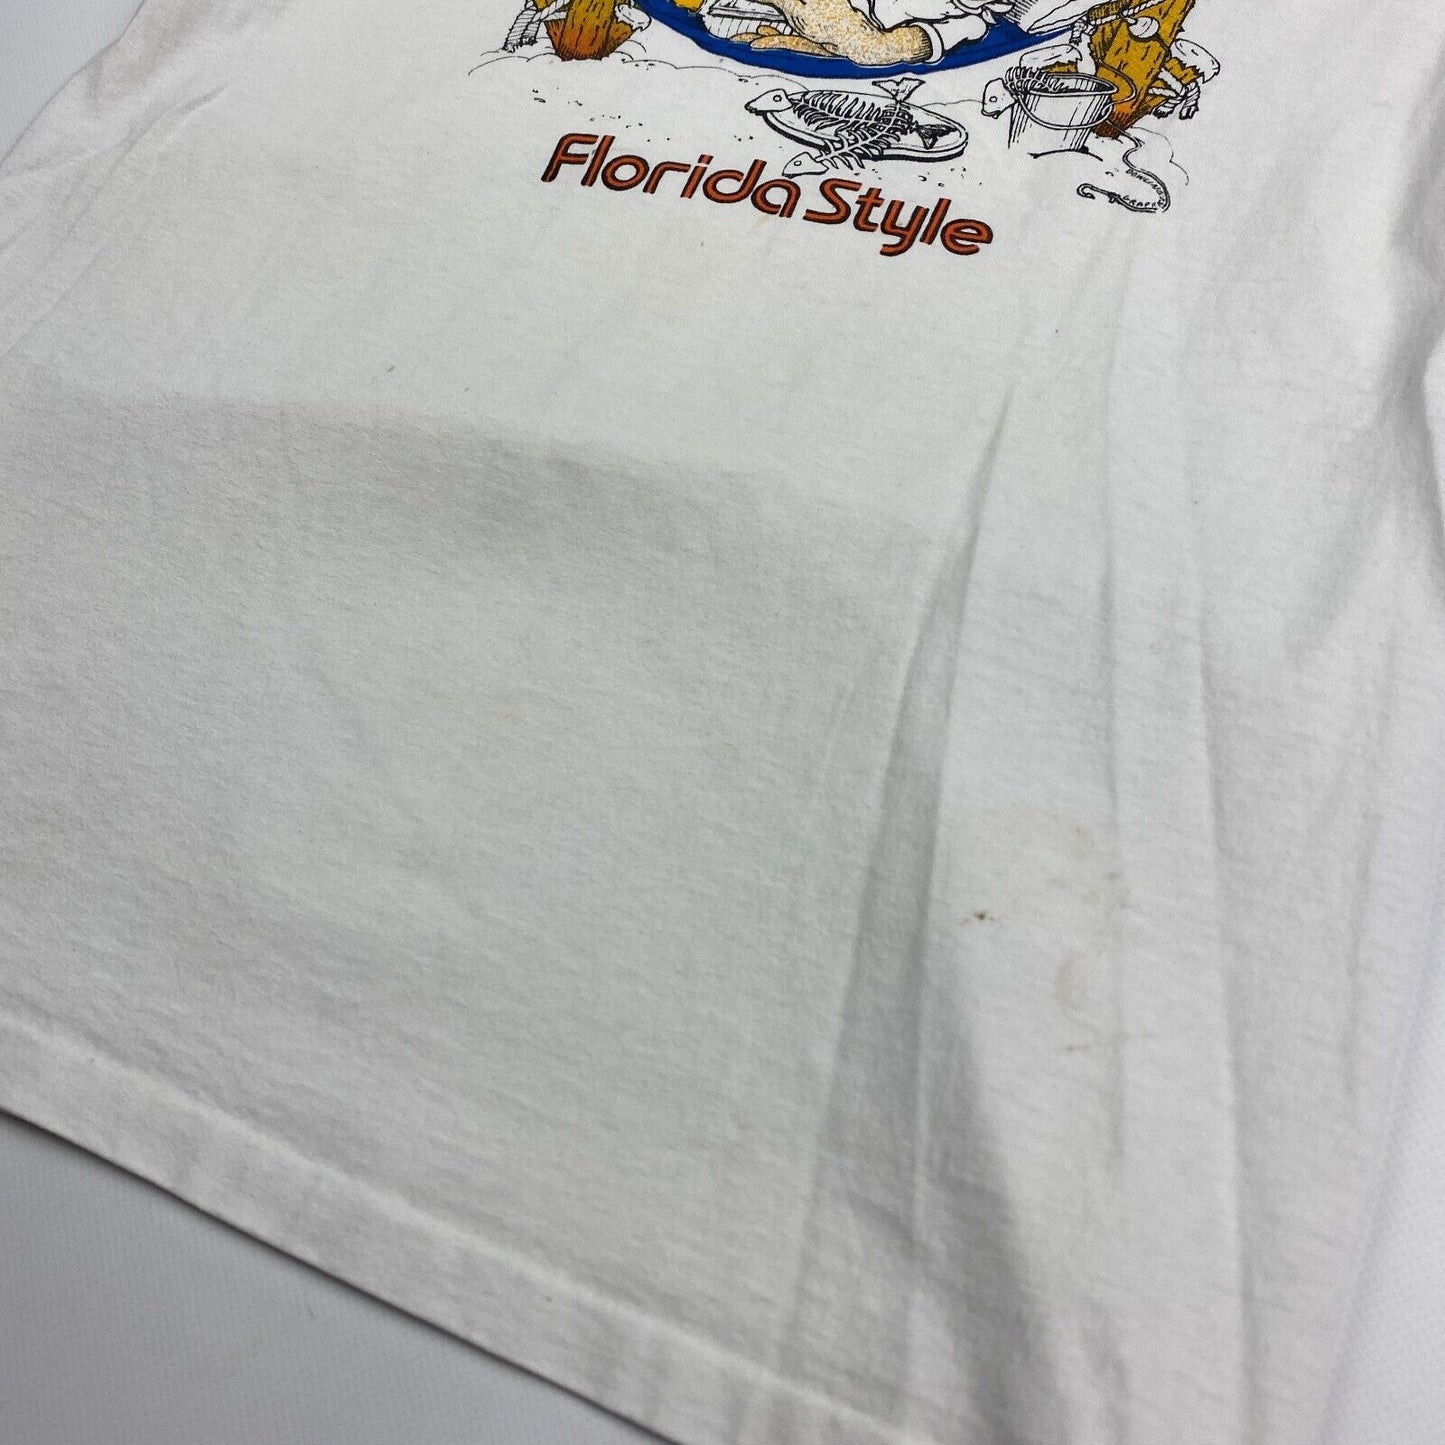 VINTAGE 90s Florida Style Chillen Illustration White T-Shirt sz Medium Men